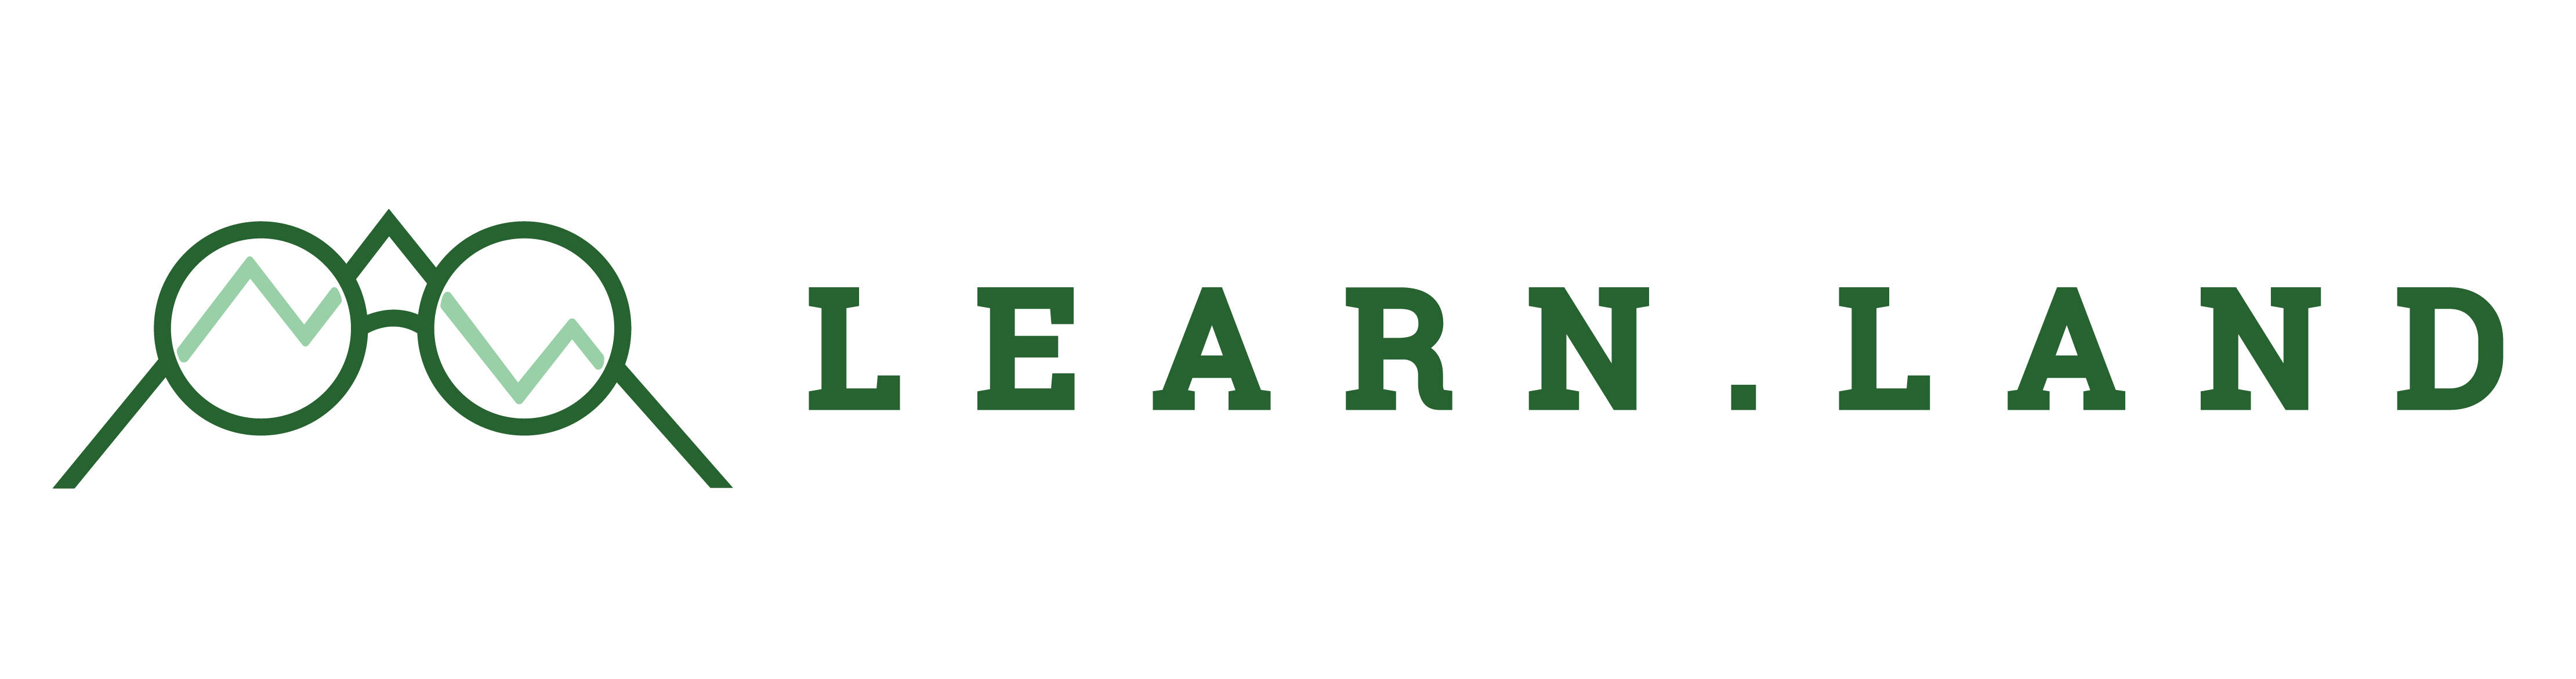 LEARN LAND 2020 Logo - SET 2-01